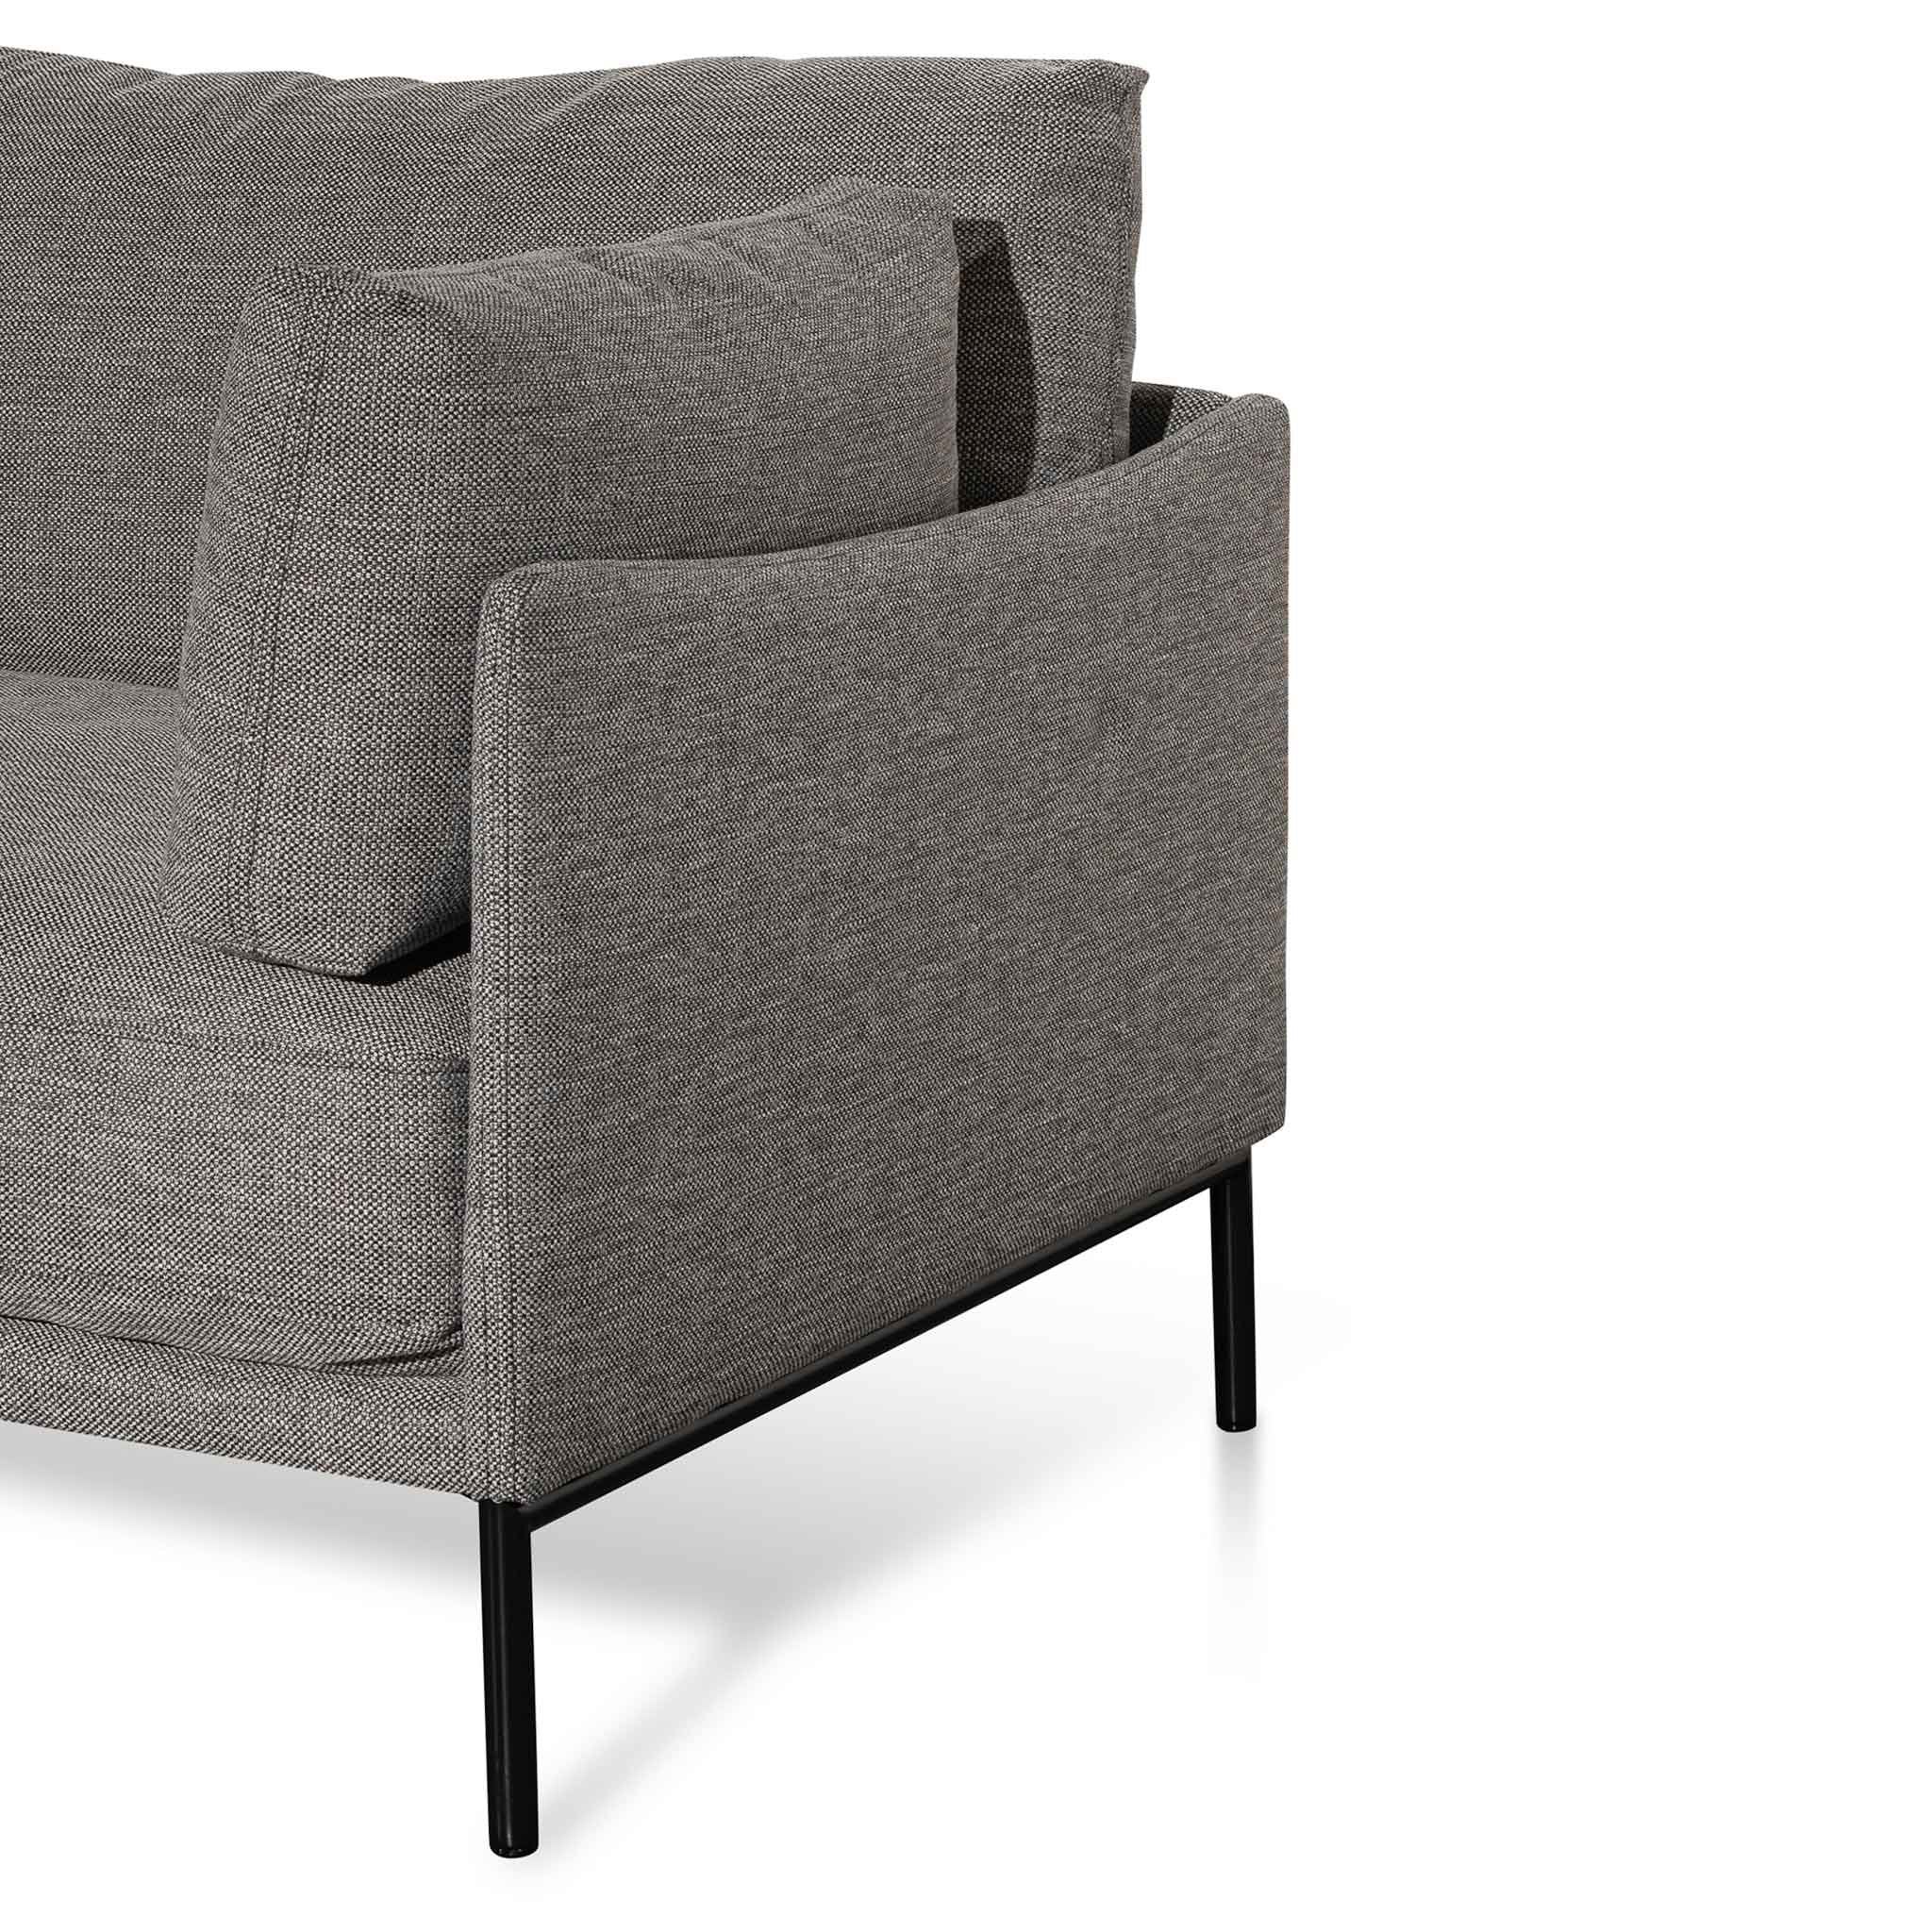 Emilis 4S Left Chaise Sofa - Graphite Grey - Sofas